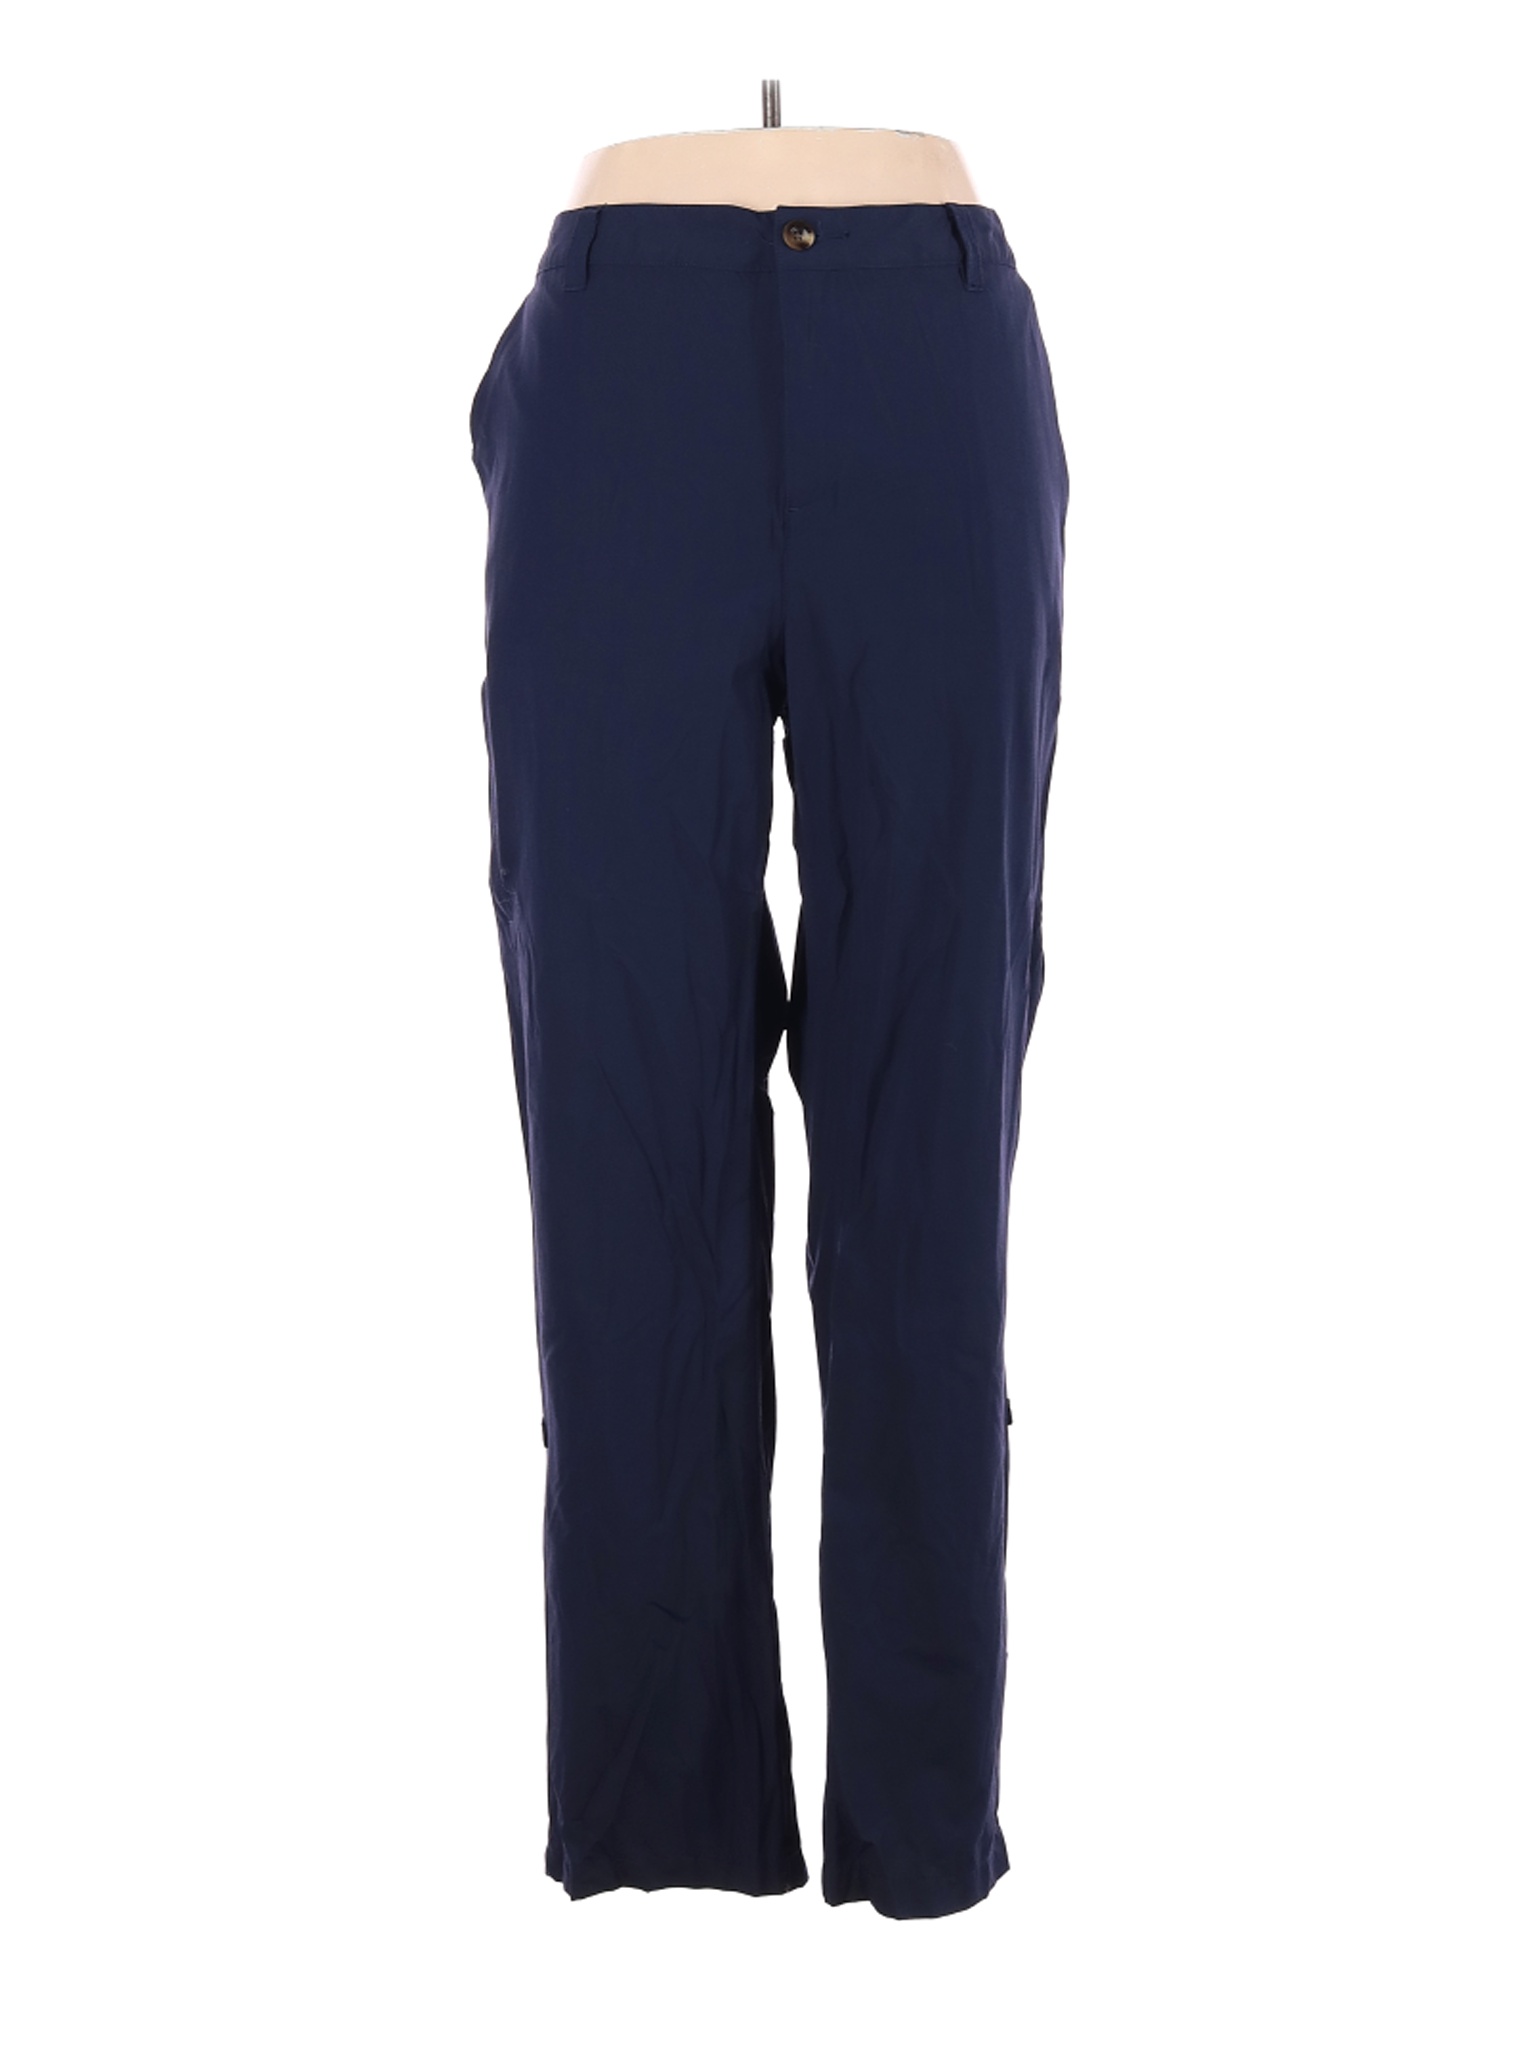 Travelsmith Women Blue Casual Pants XL | eBay